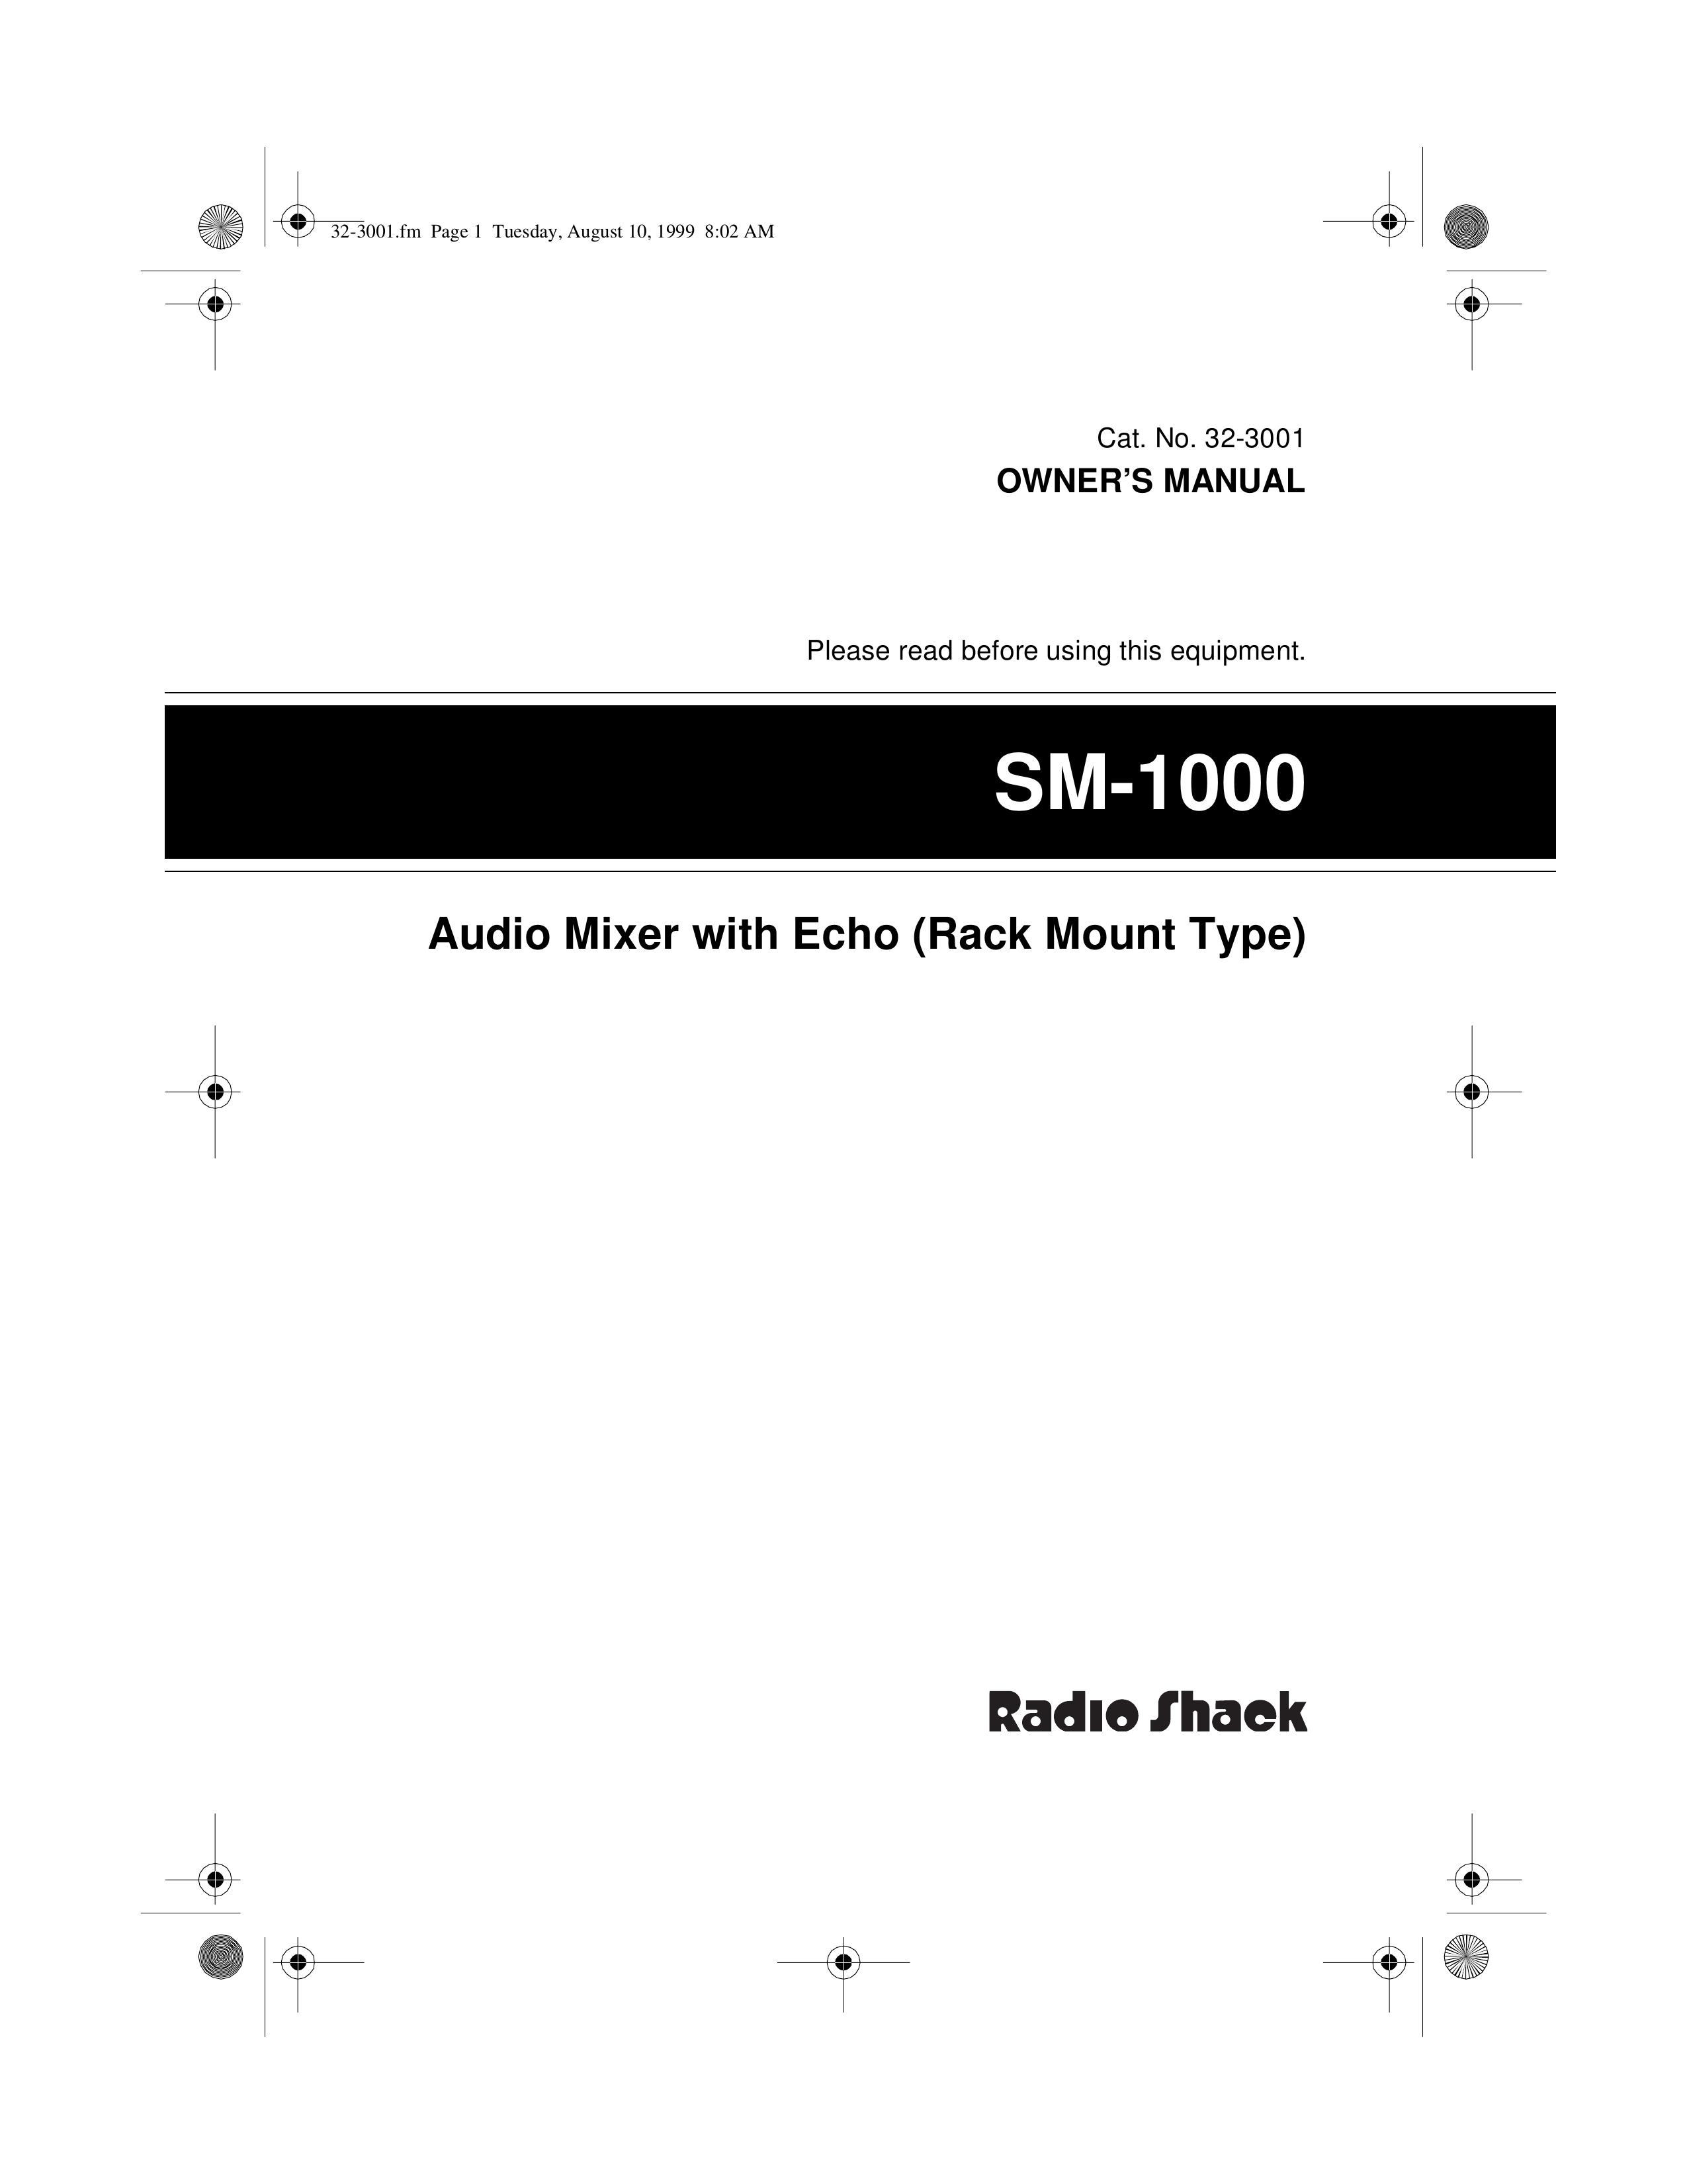 Radio Shack SM-1000 Music Mixer User Manual